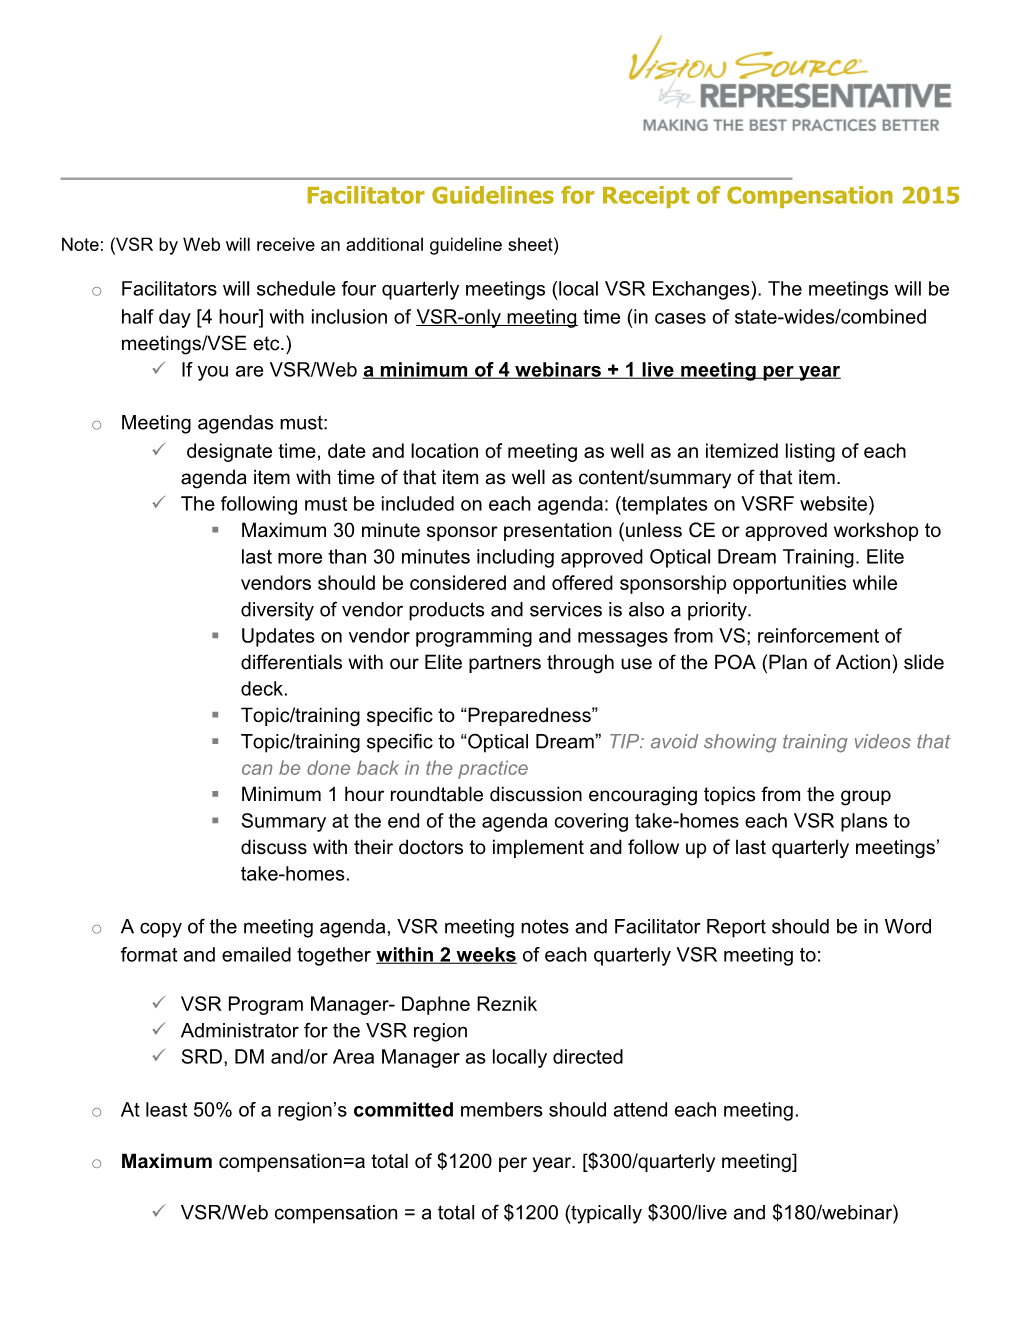 2007 VSR Facilitator Compensation Plan